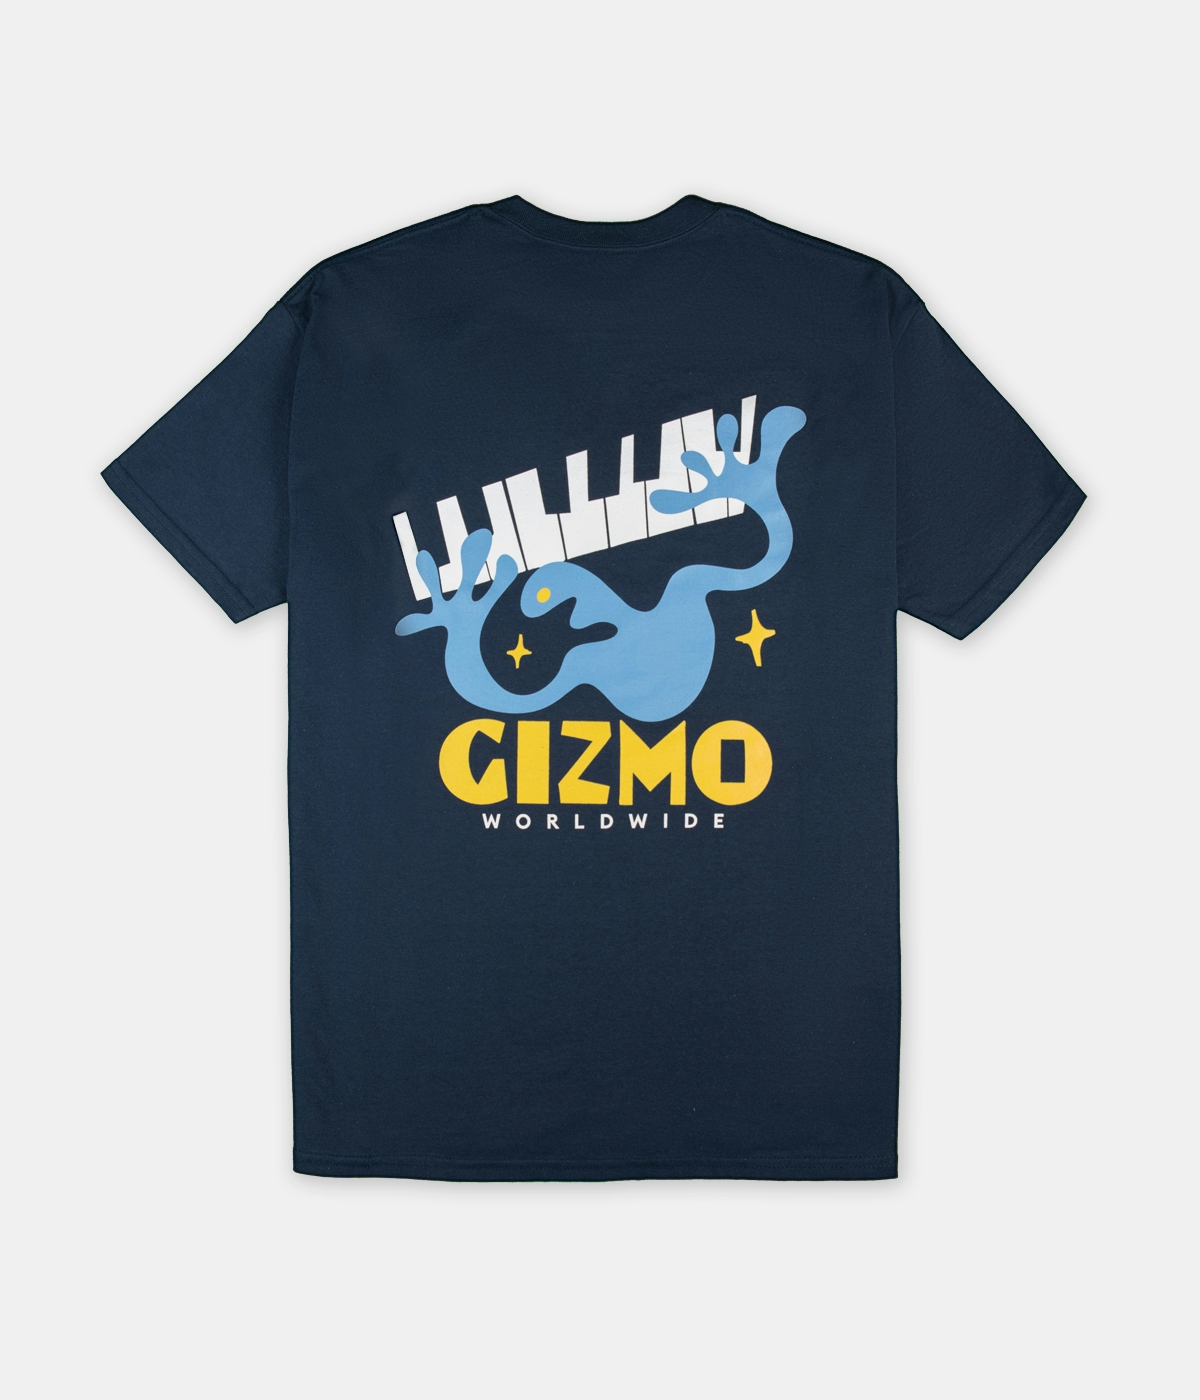 Jazz T-shirt